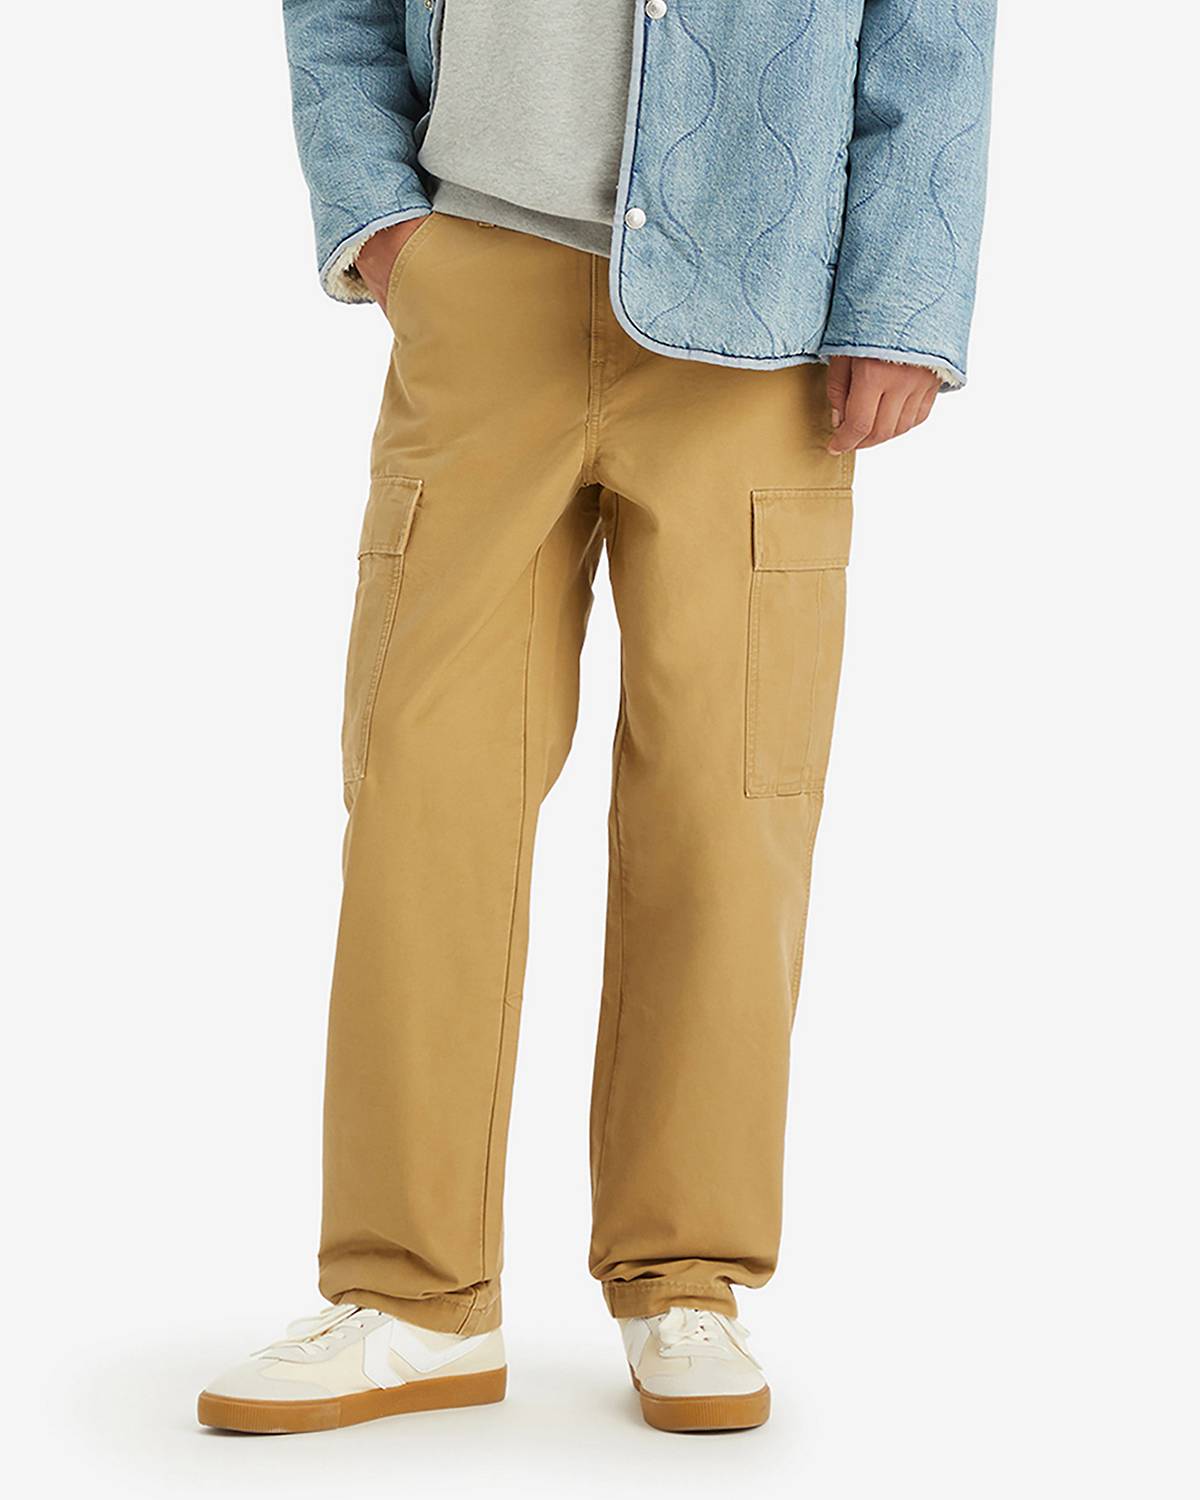 Men's Pants: Shop Men's Sweatpants, Cargo & Chino Styles